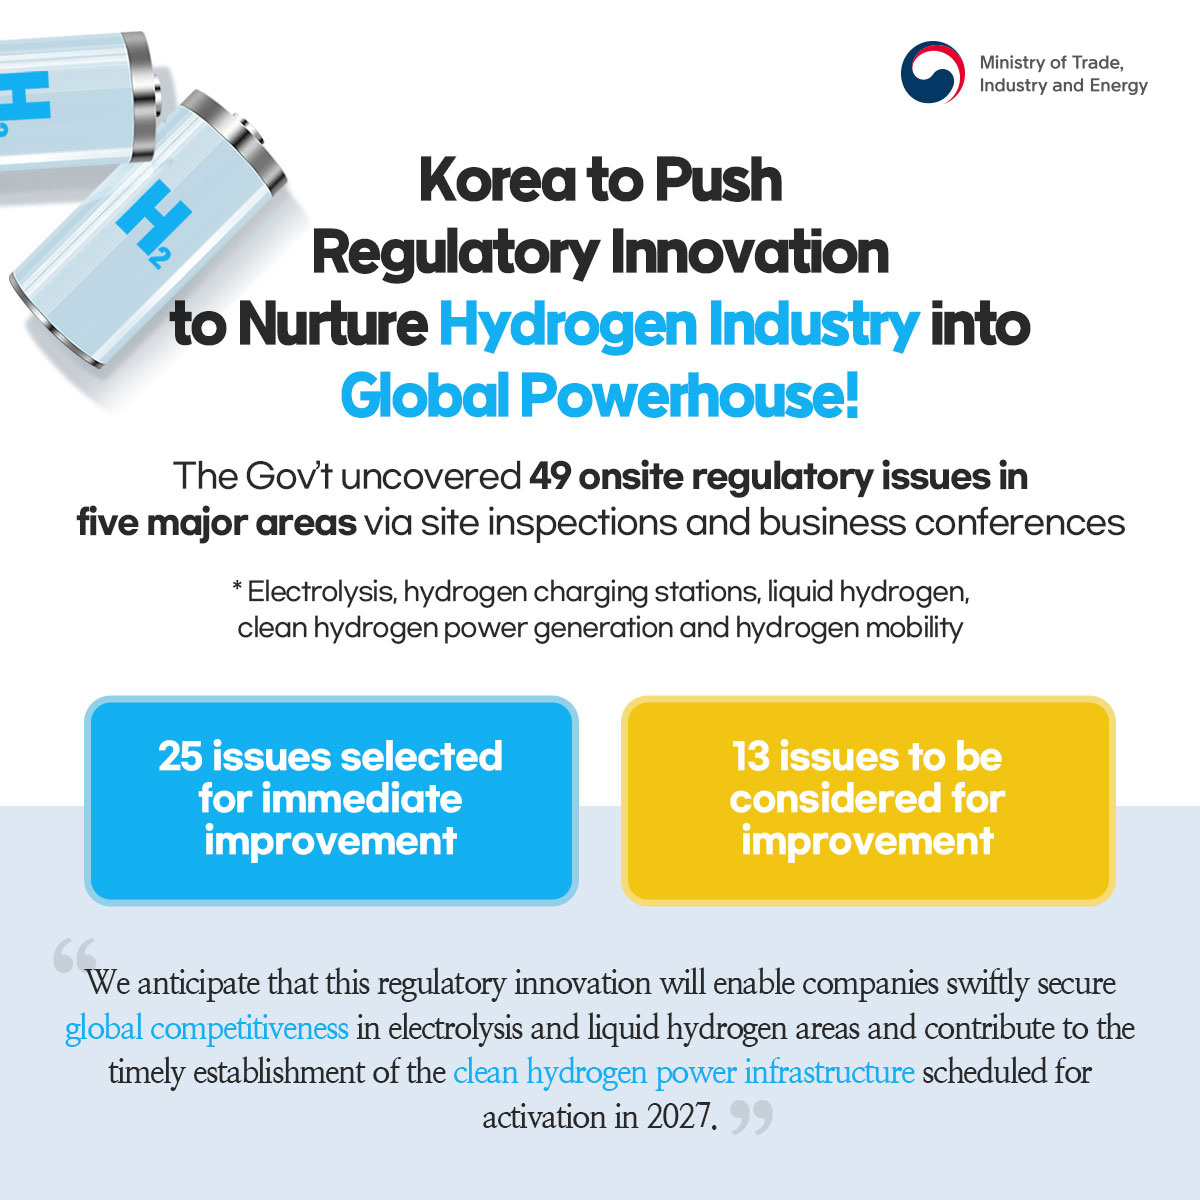 Korea to nurture hydrogen industry into global powerhouse via regulatory innovation!